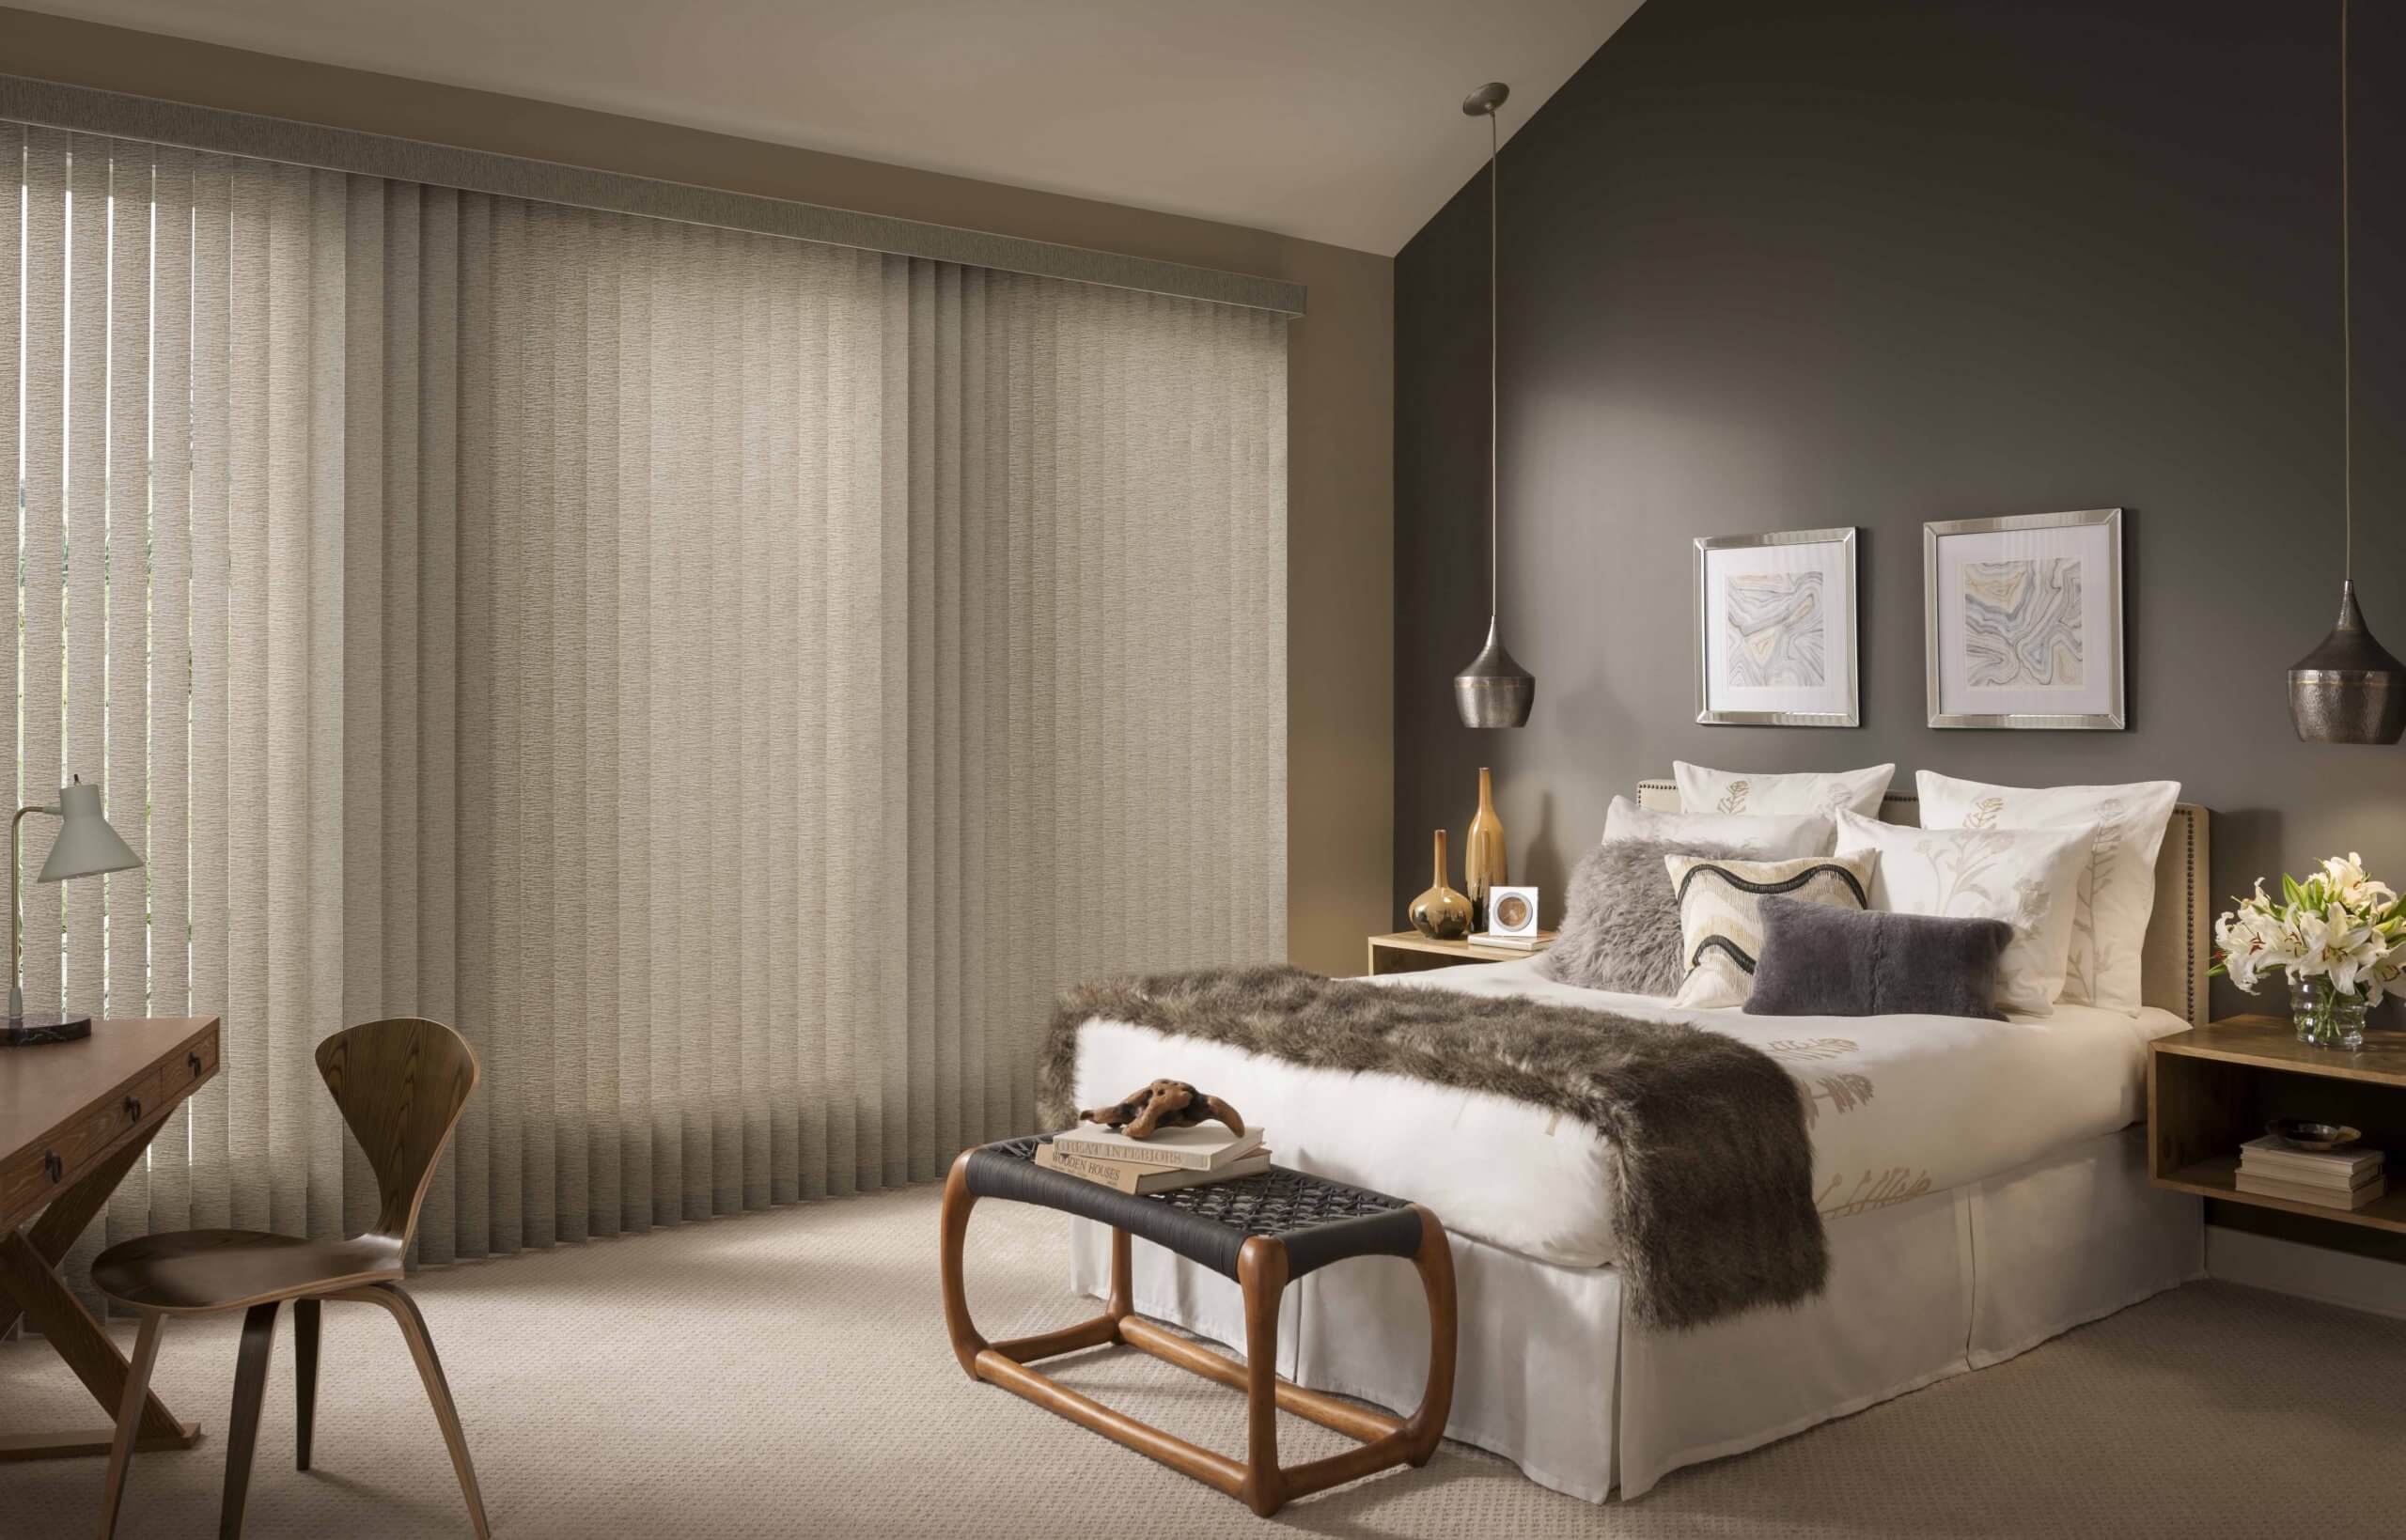 Beige/ tan vertical shades for bedroom window treatment